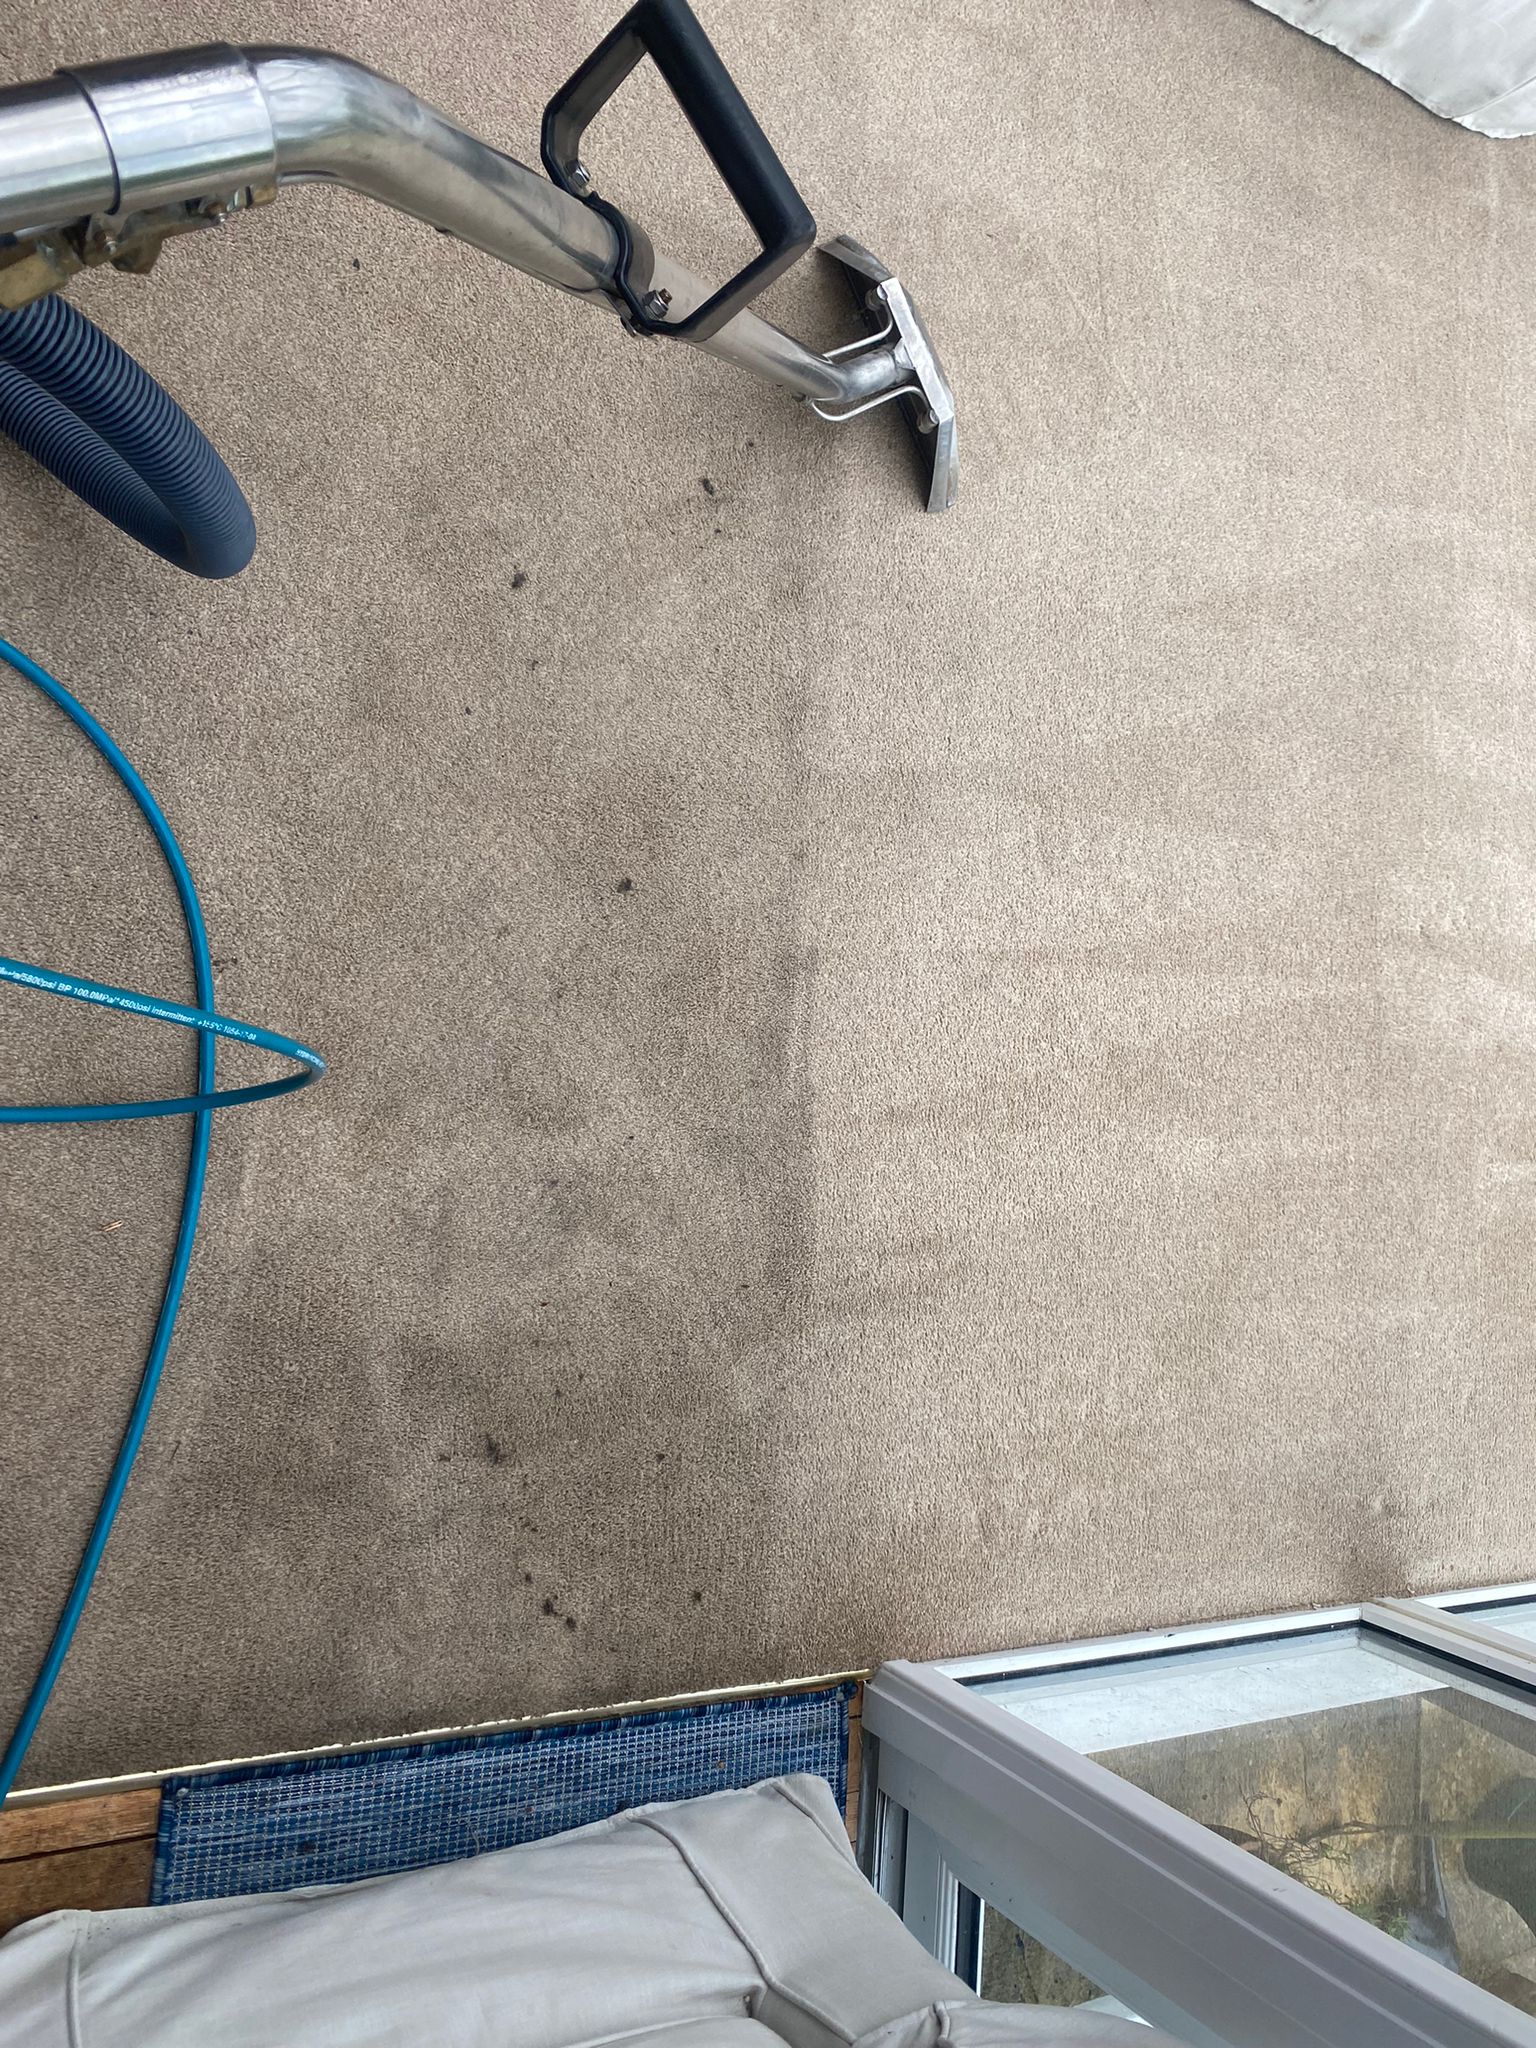 Carpet cleaning progress